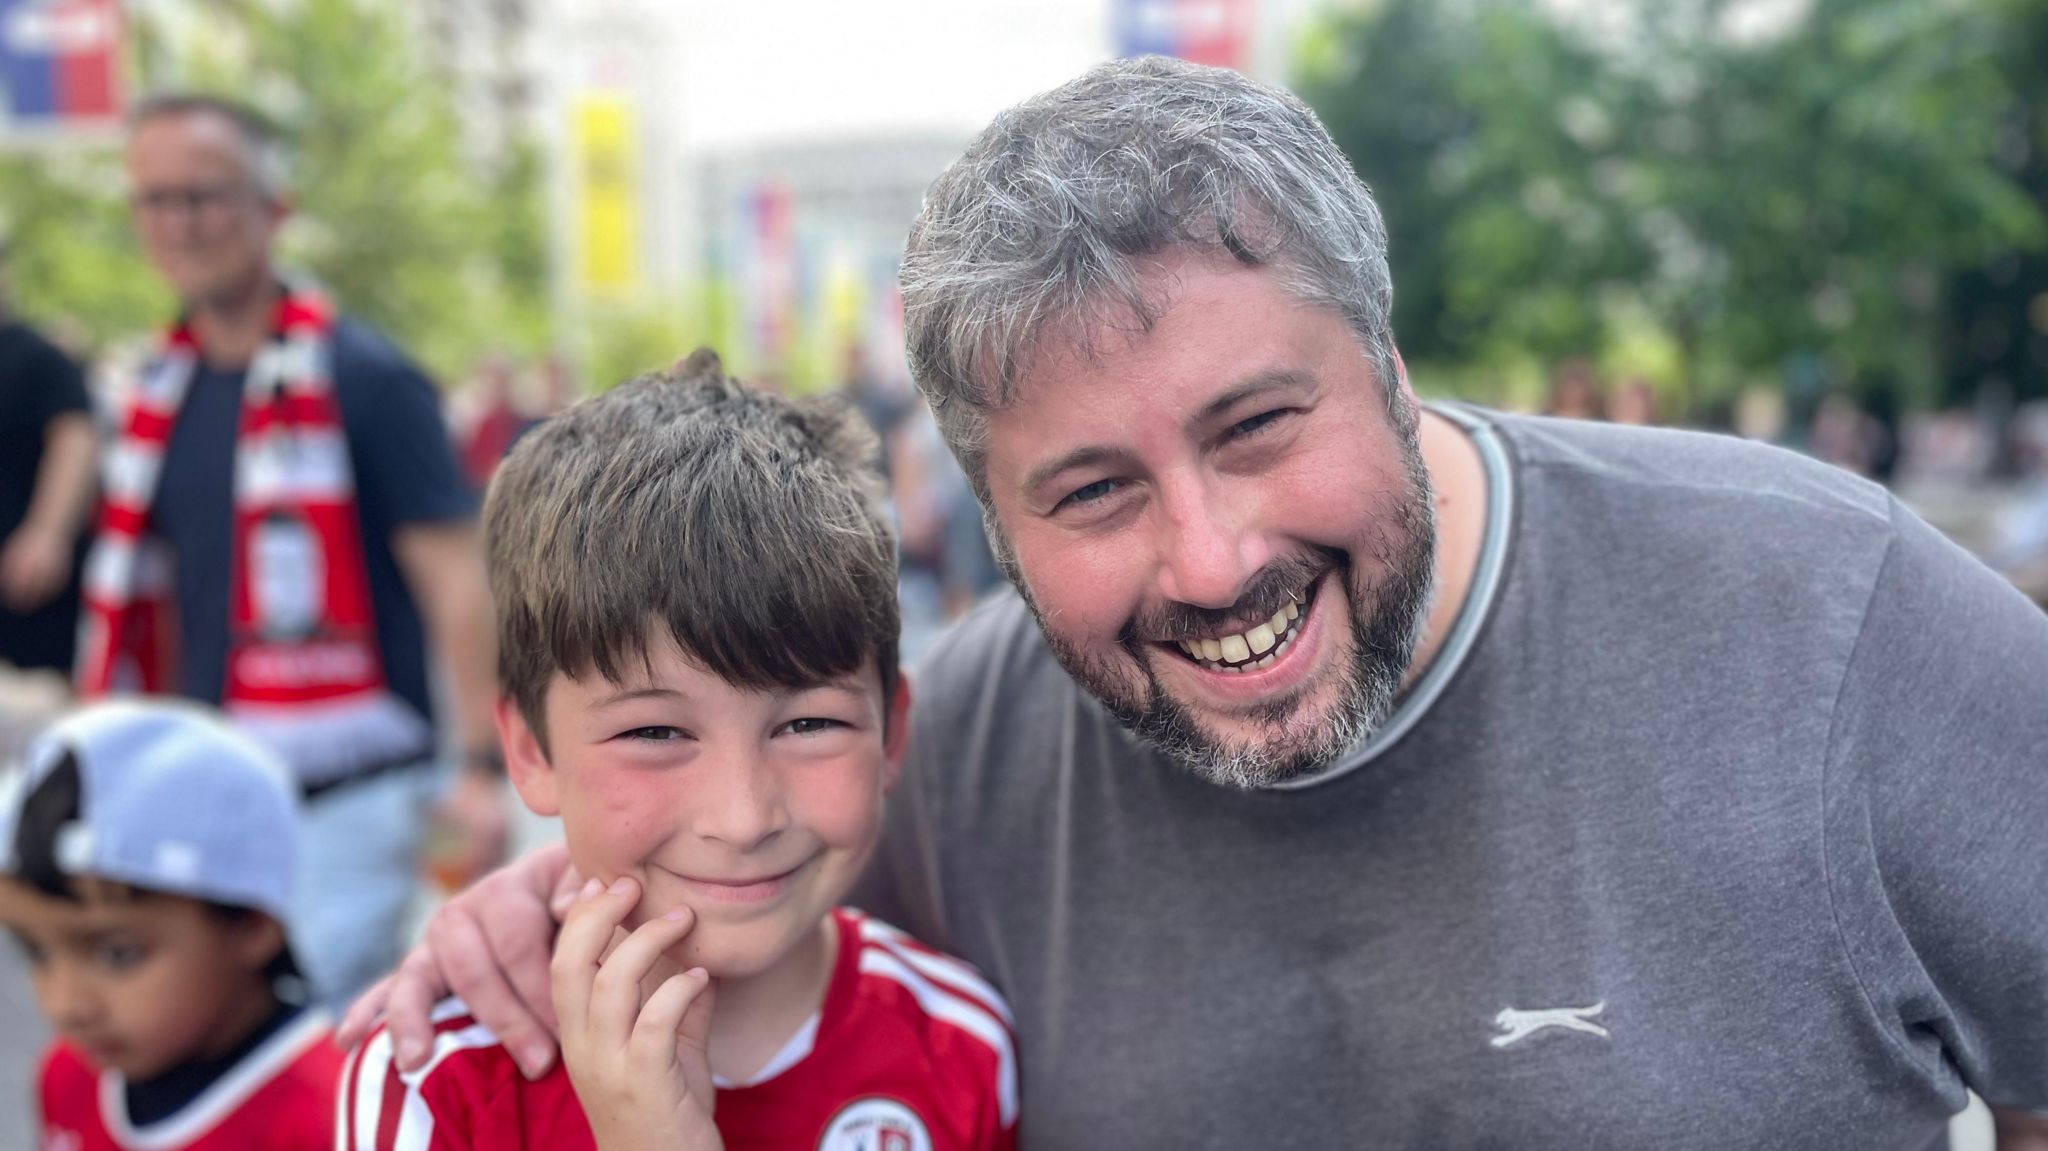 Noah and his dad Sam outside Wembley Stadium